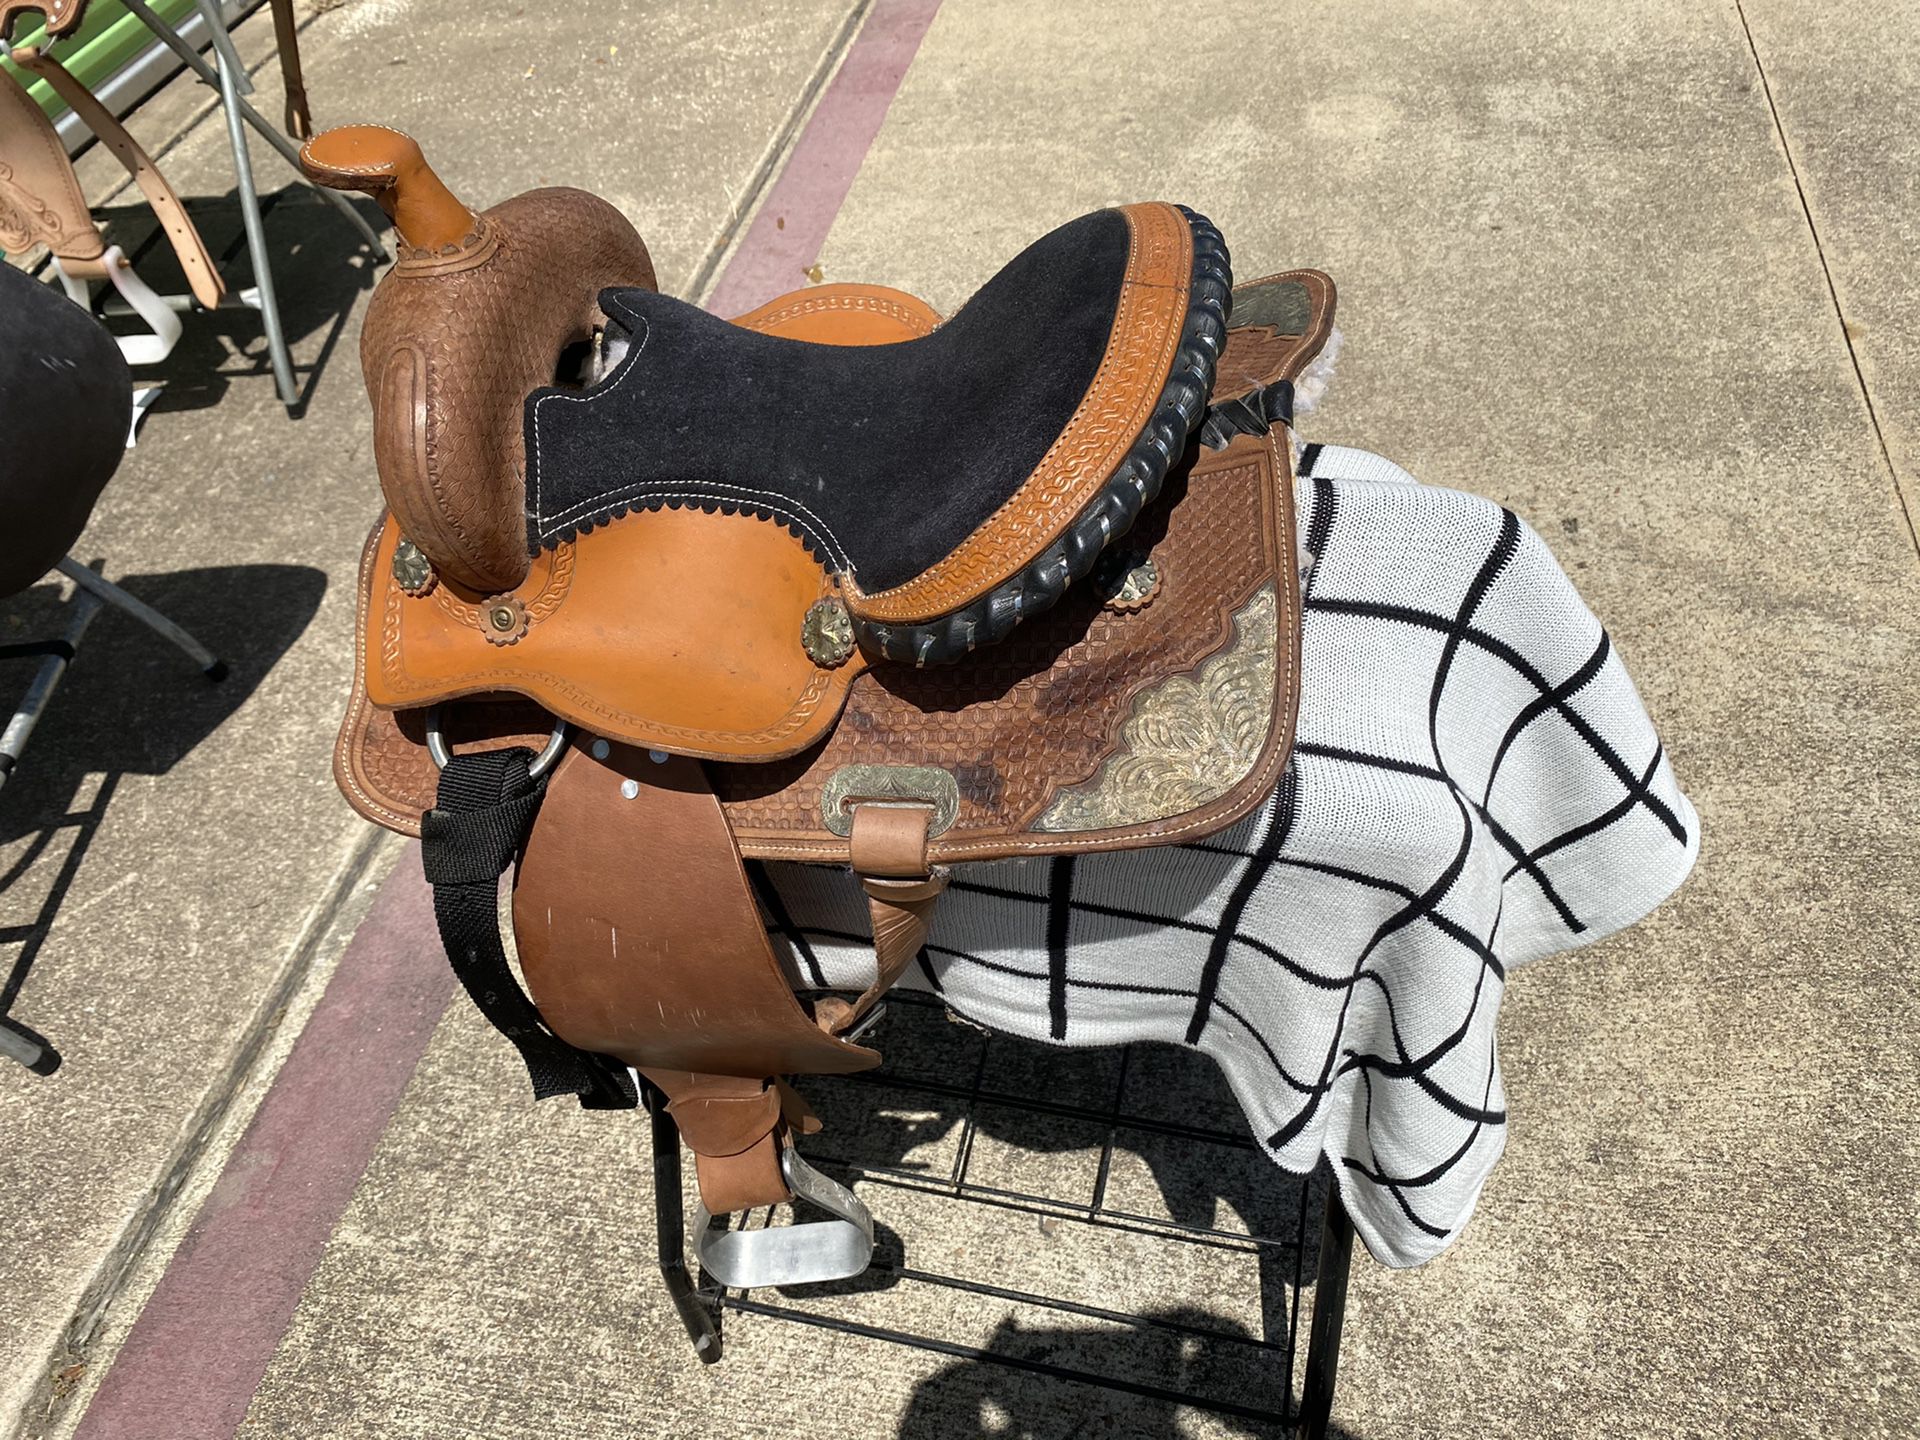 Western saddle Kids saddle size 13” black suede seat